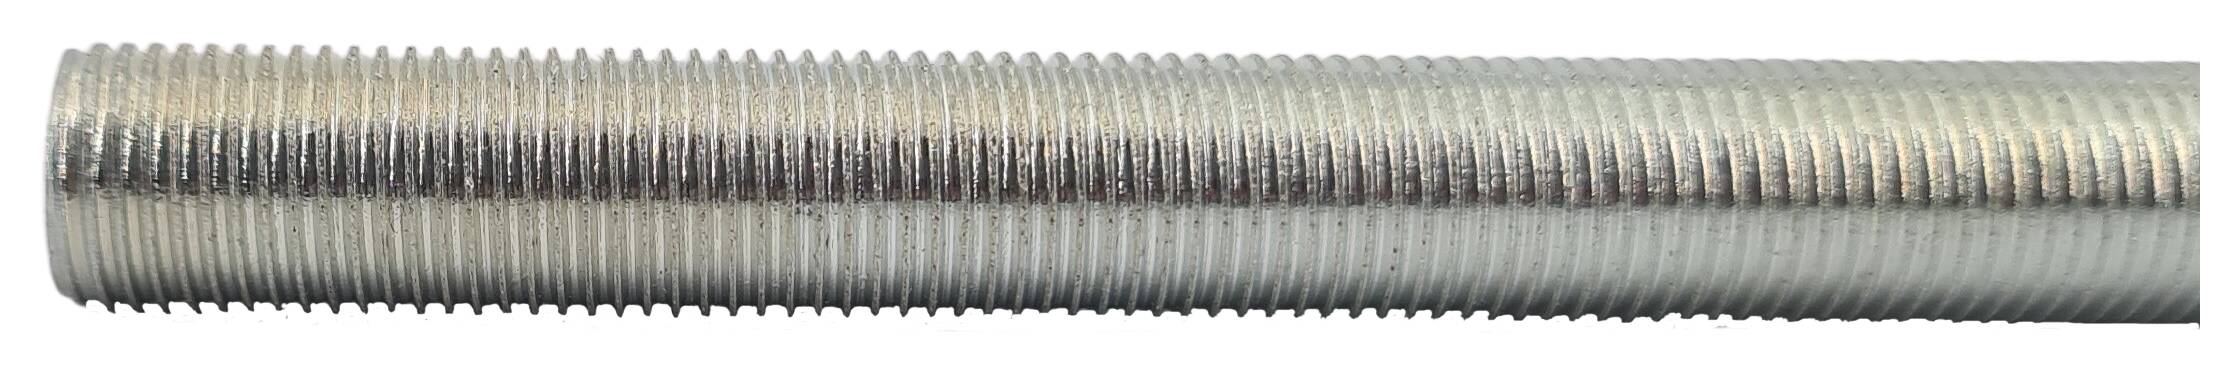 iron thread tube M10x1x365 round zinc